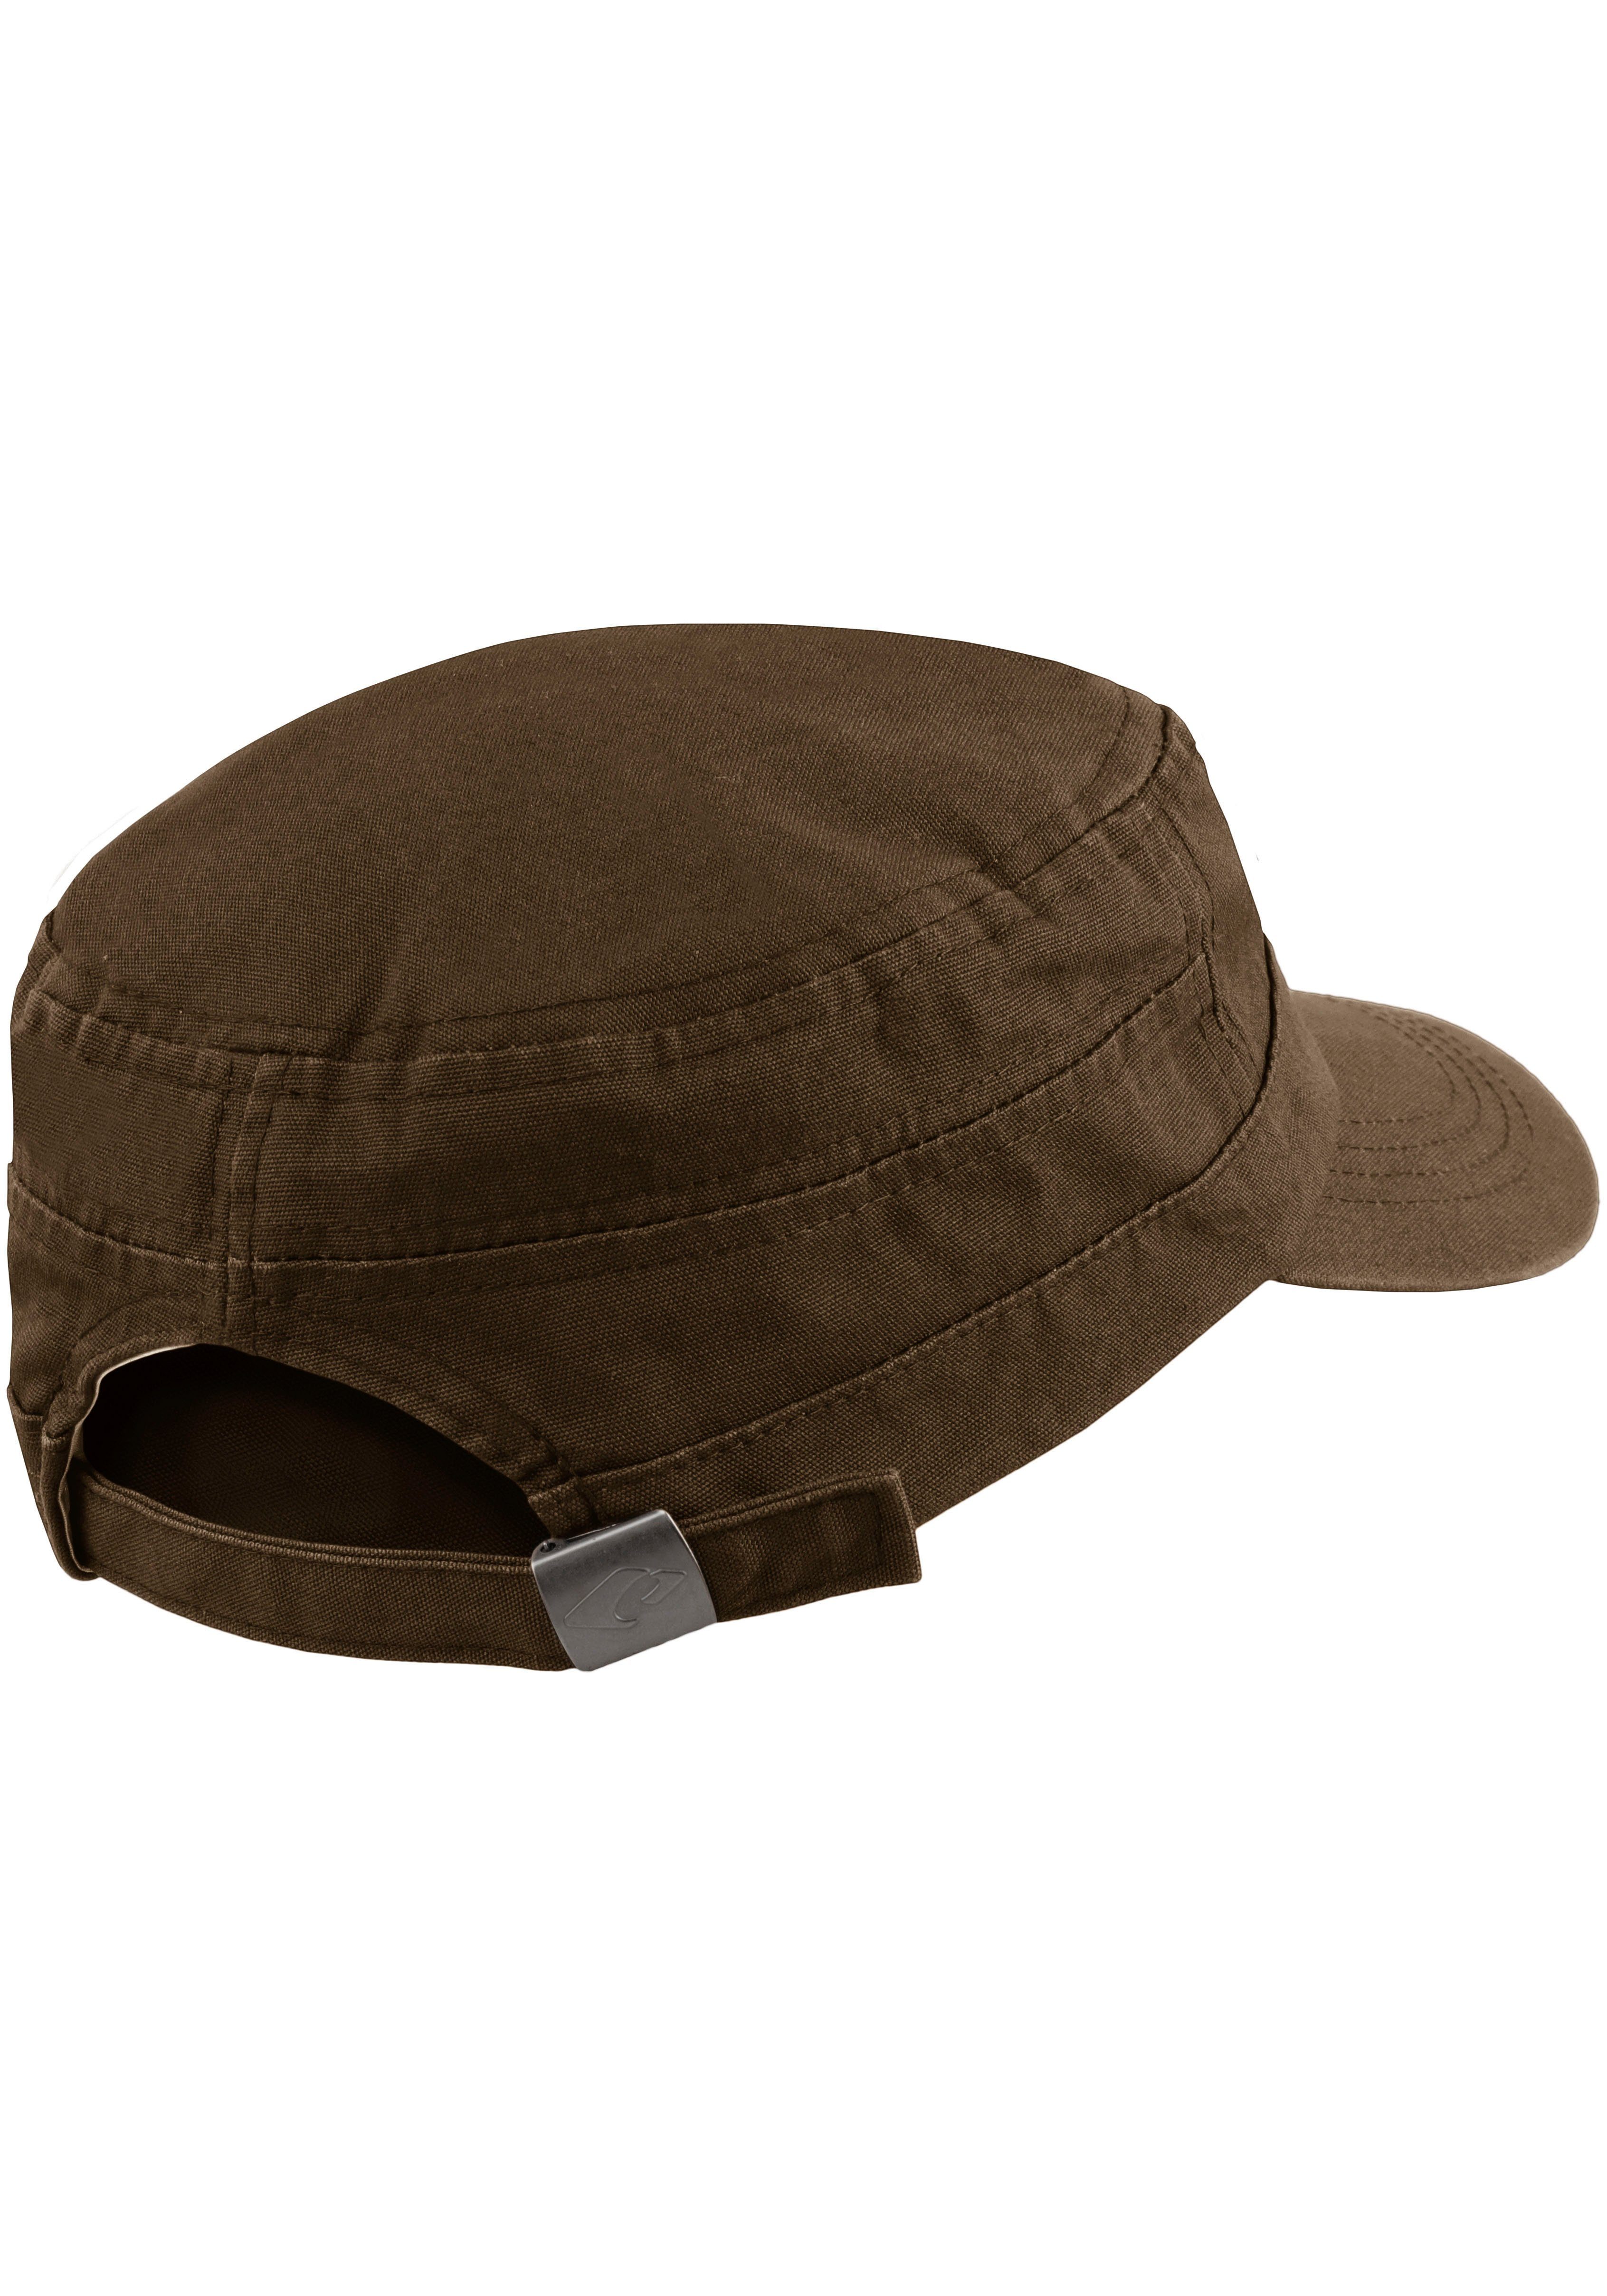 chillouts Army Cap aus Paso One atmungsaktiv, Baumwolle, Size reiner braun El Hat